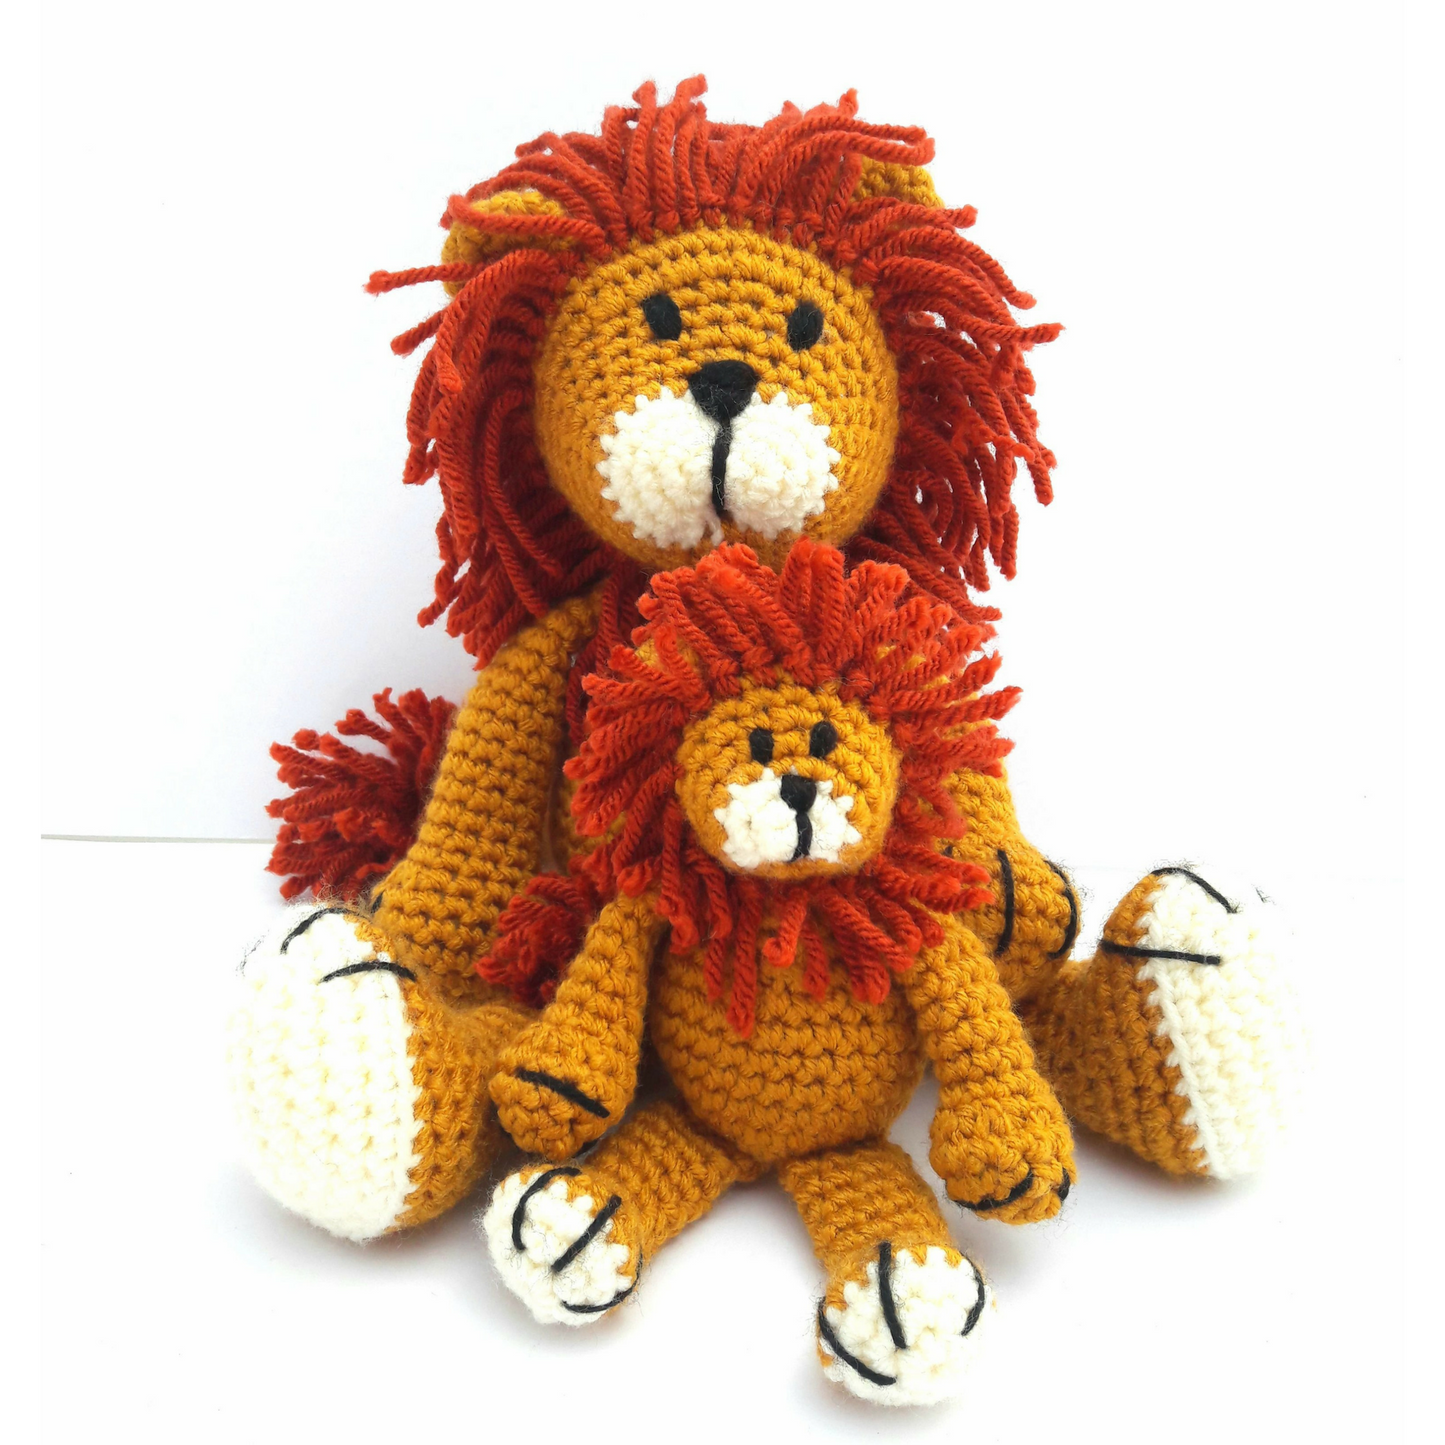 Full size crochet lion and baby crochet lion